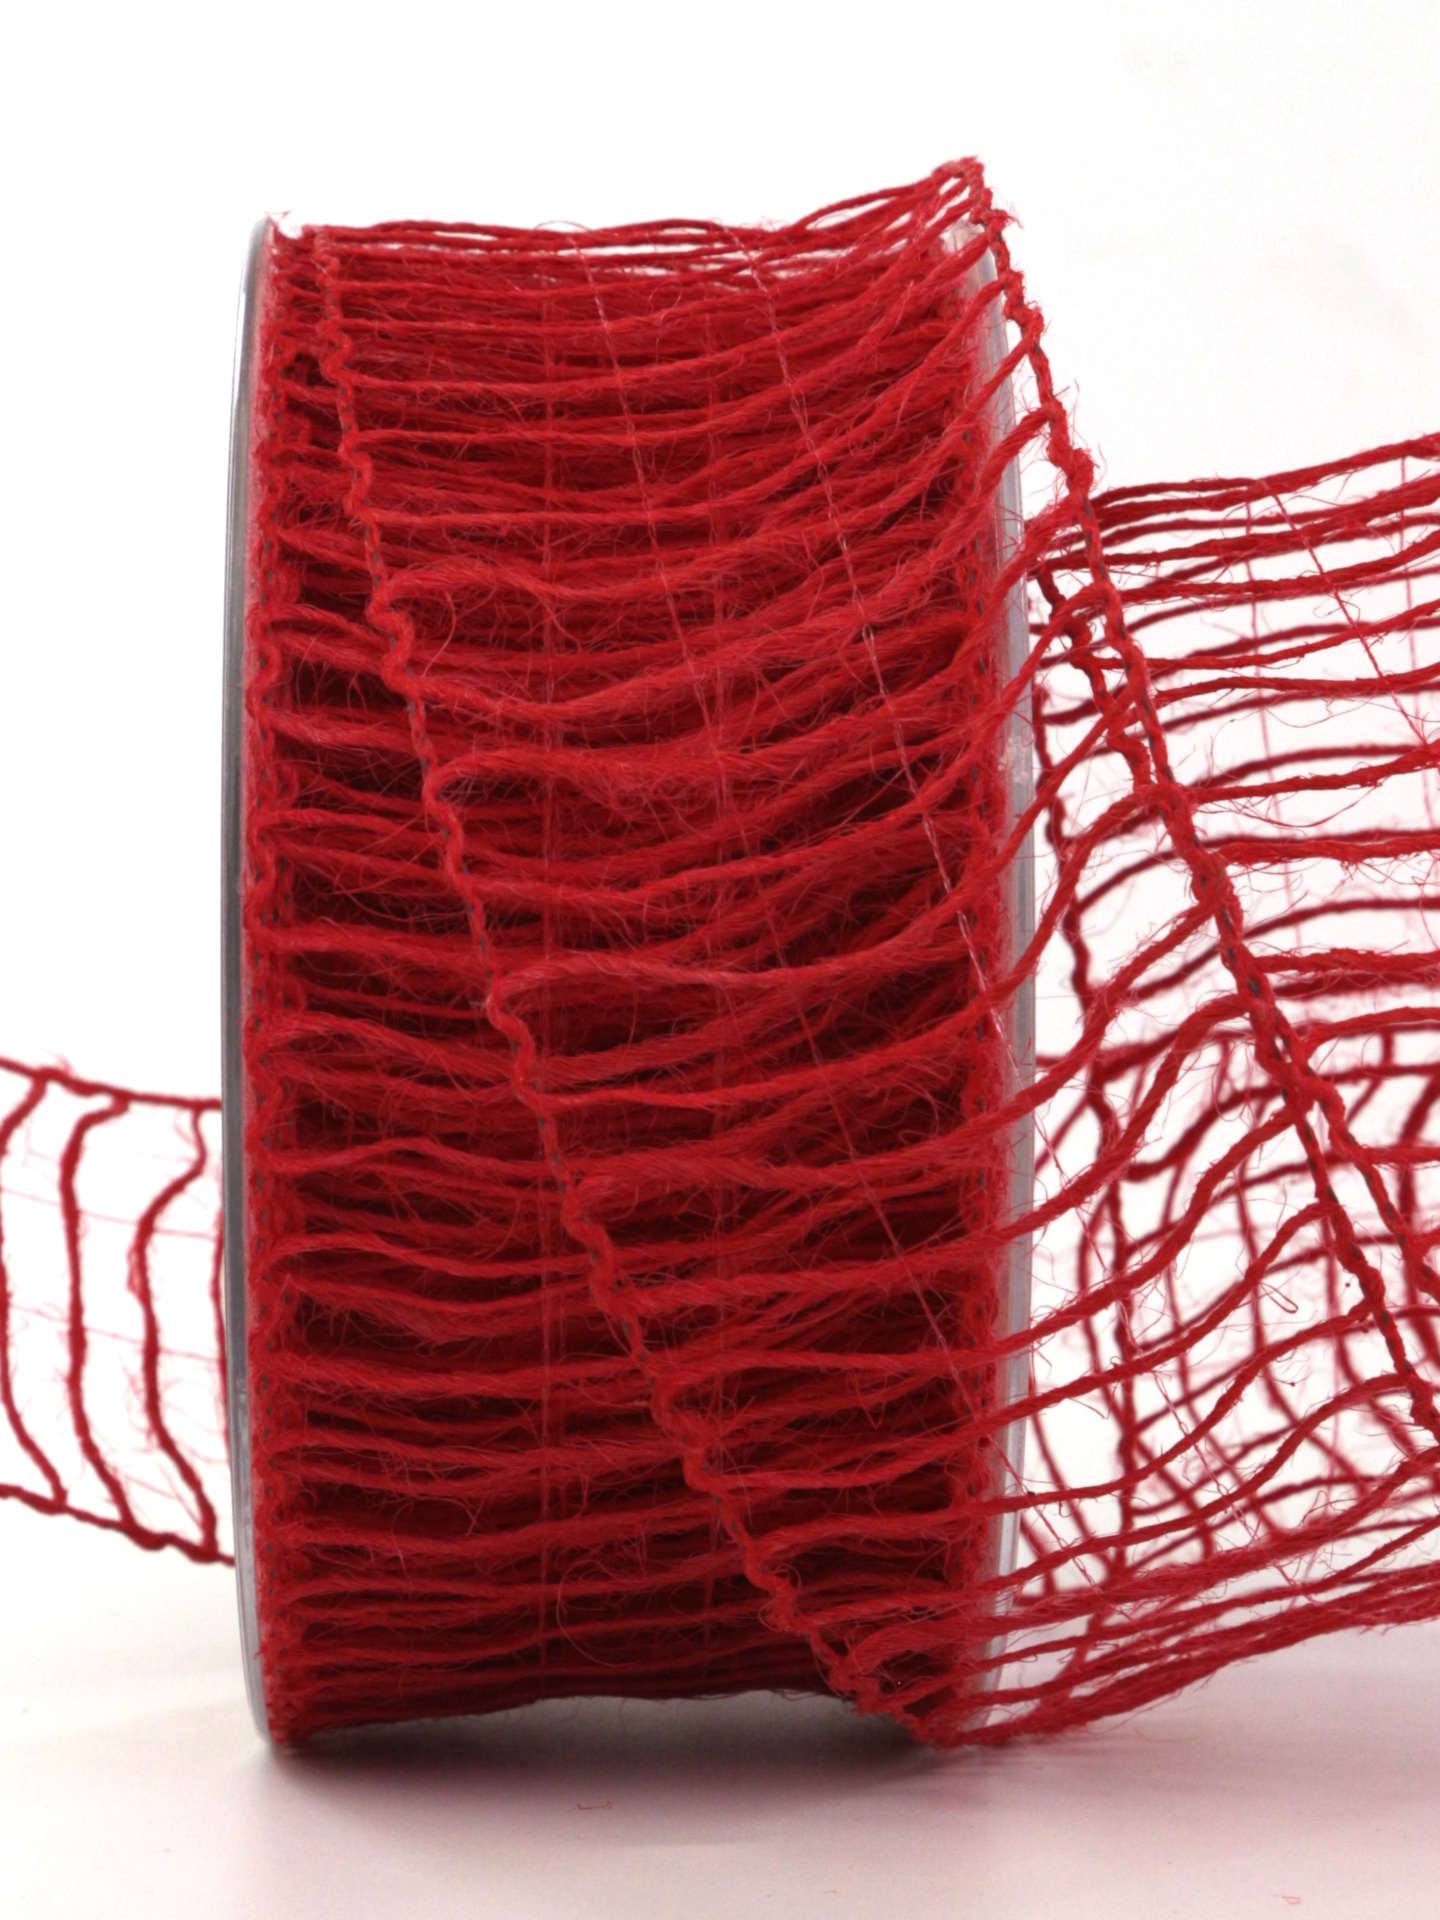 Grobes Gitterband, outdoor, rot, 50 mm breit, 10 m Rolle - netzbaender, dekobaender, geschenkbaender